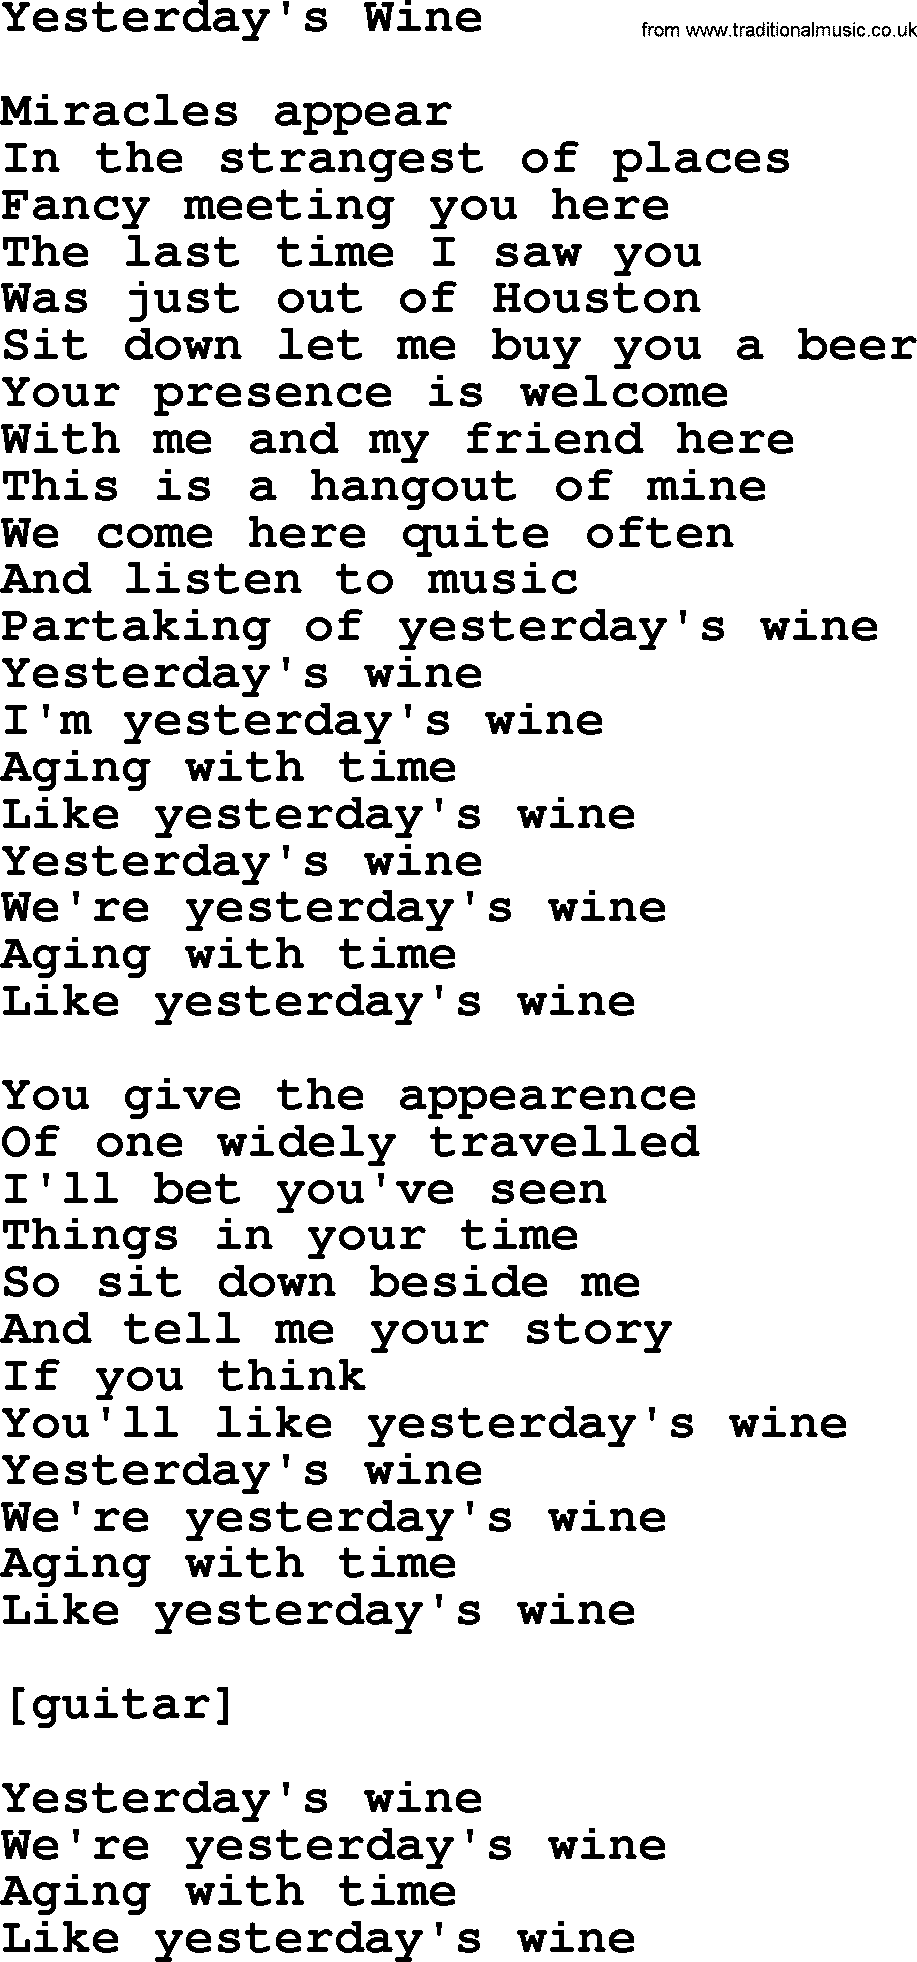 Willie Nelson song: Yesterday's Wine lyrics